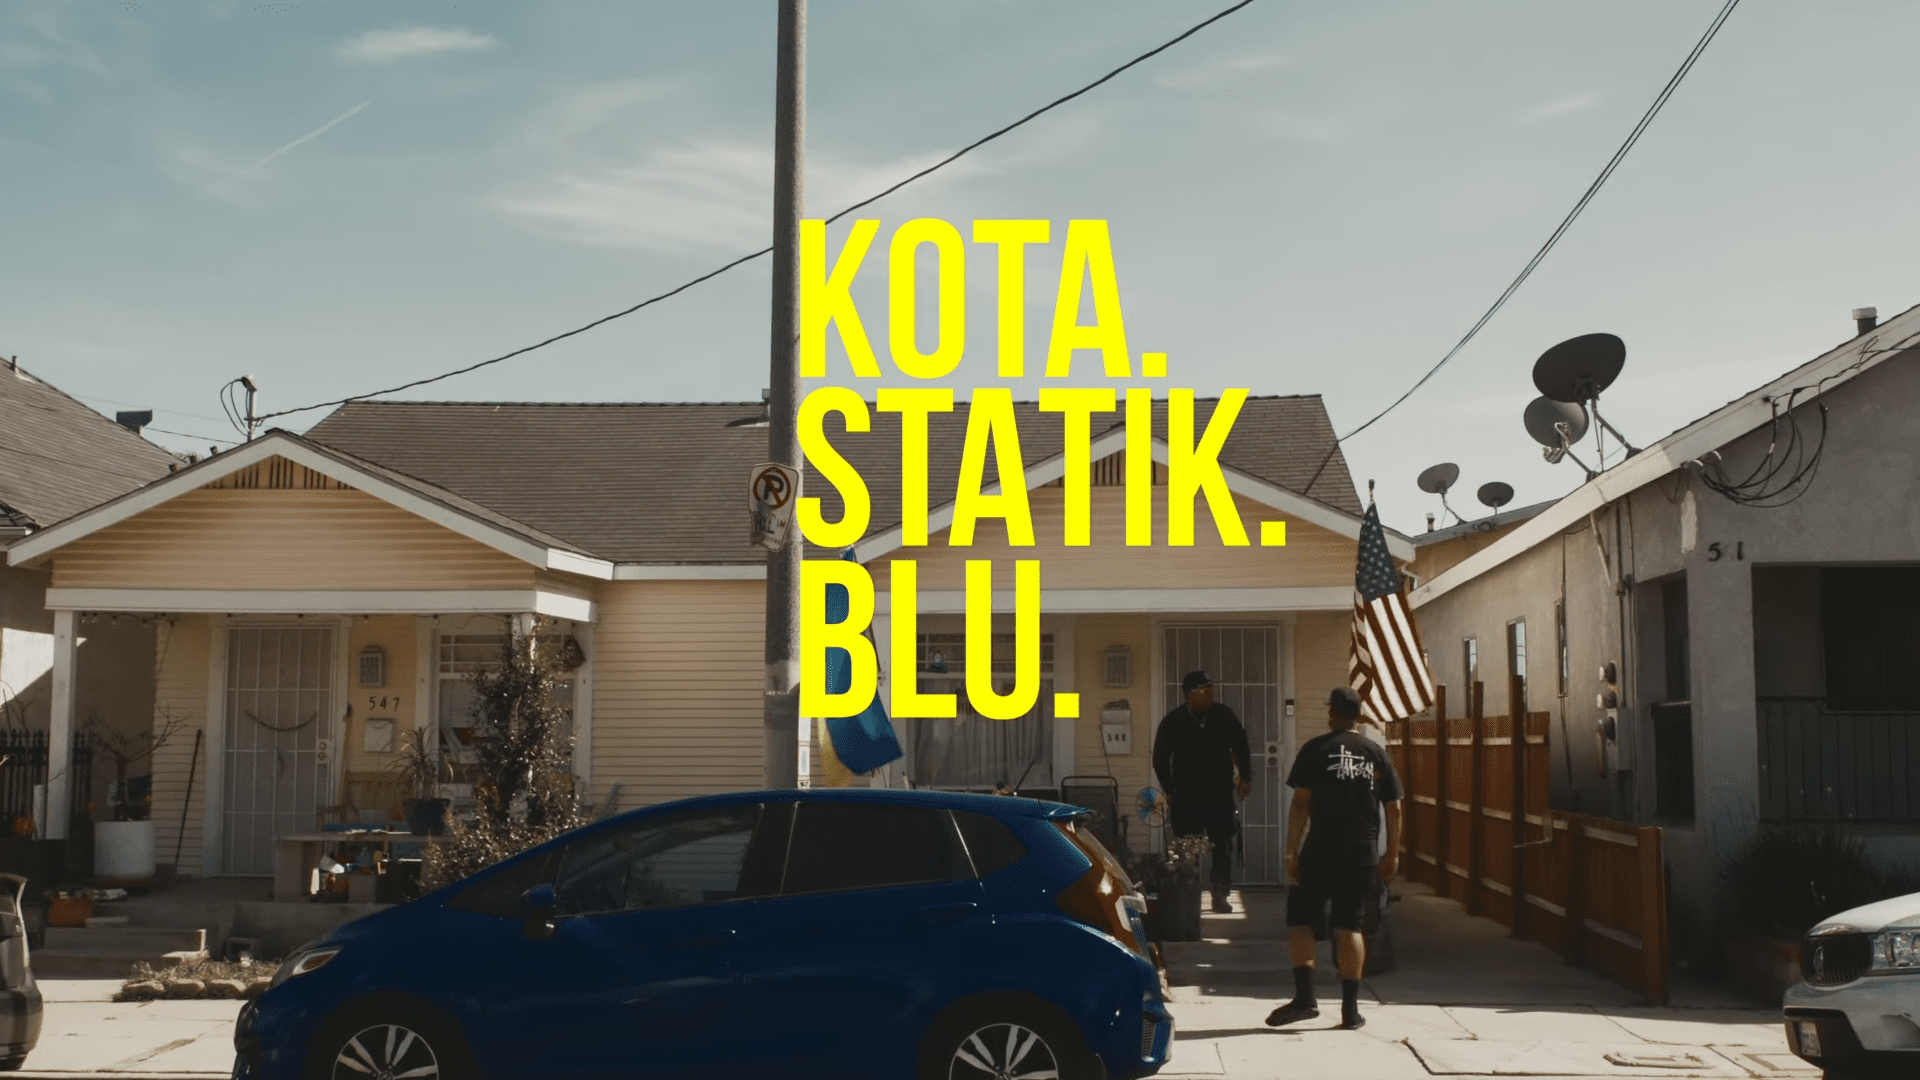 Kota The Friend & Statik Selektah Release Deluxe Album “To See A Sunset” & New Video “Brick by Brick” Feat. Blu